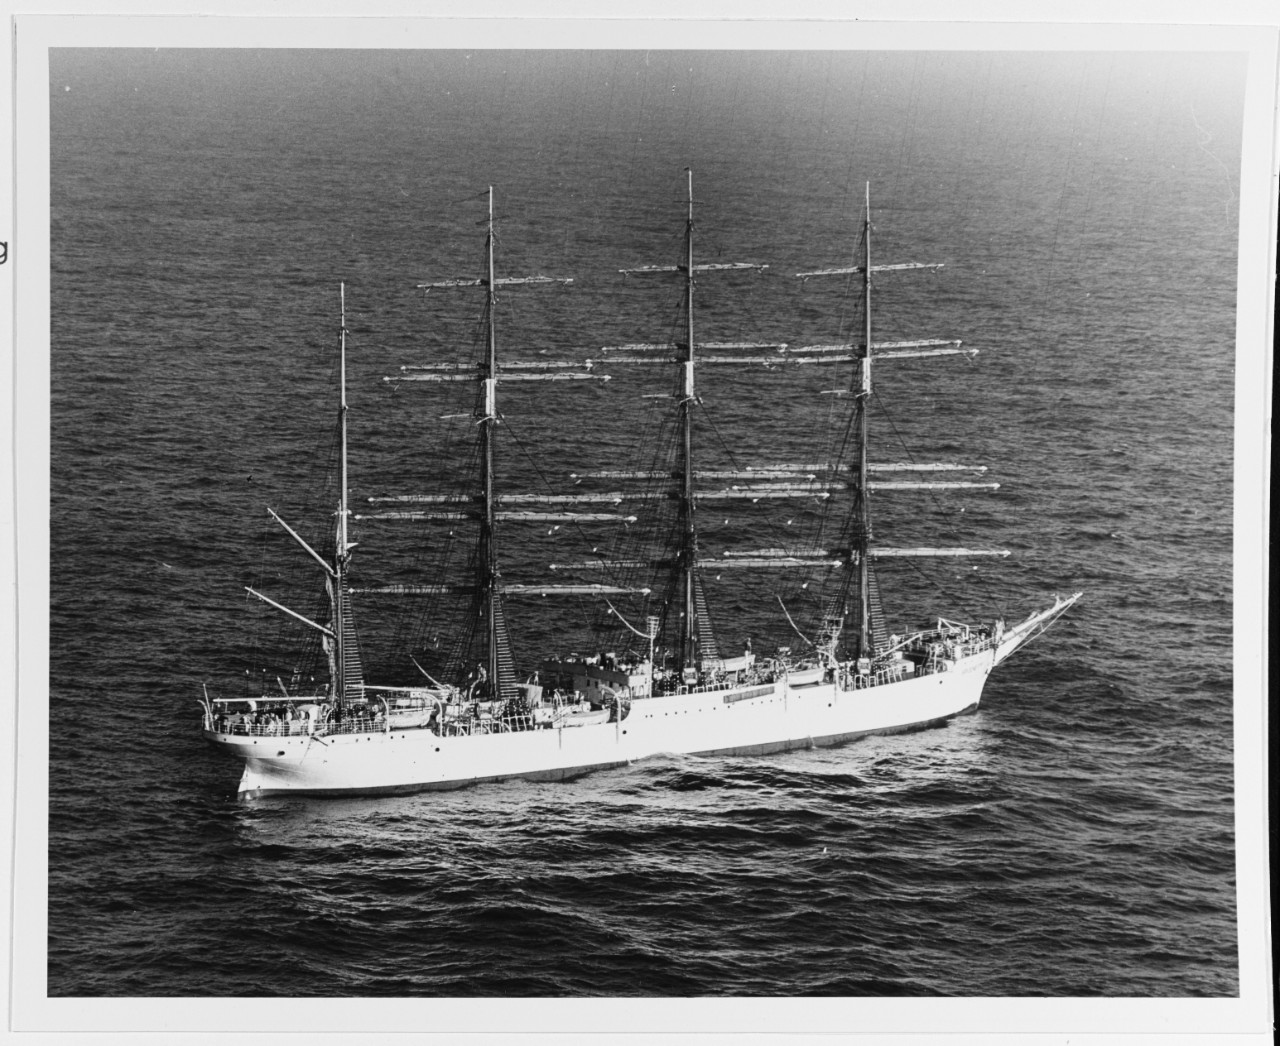 KRUZENSTERN (Soviet Sail Training Ship, 1921)